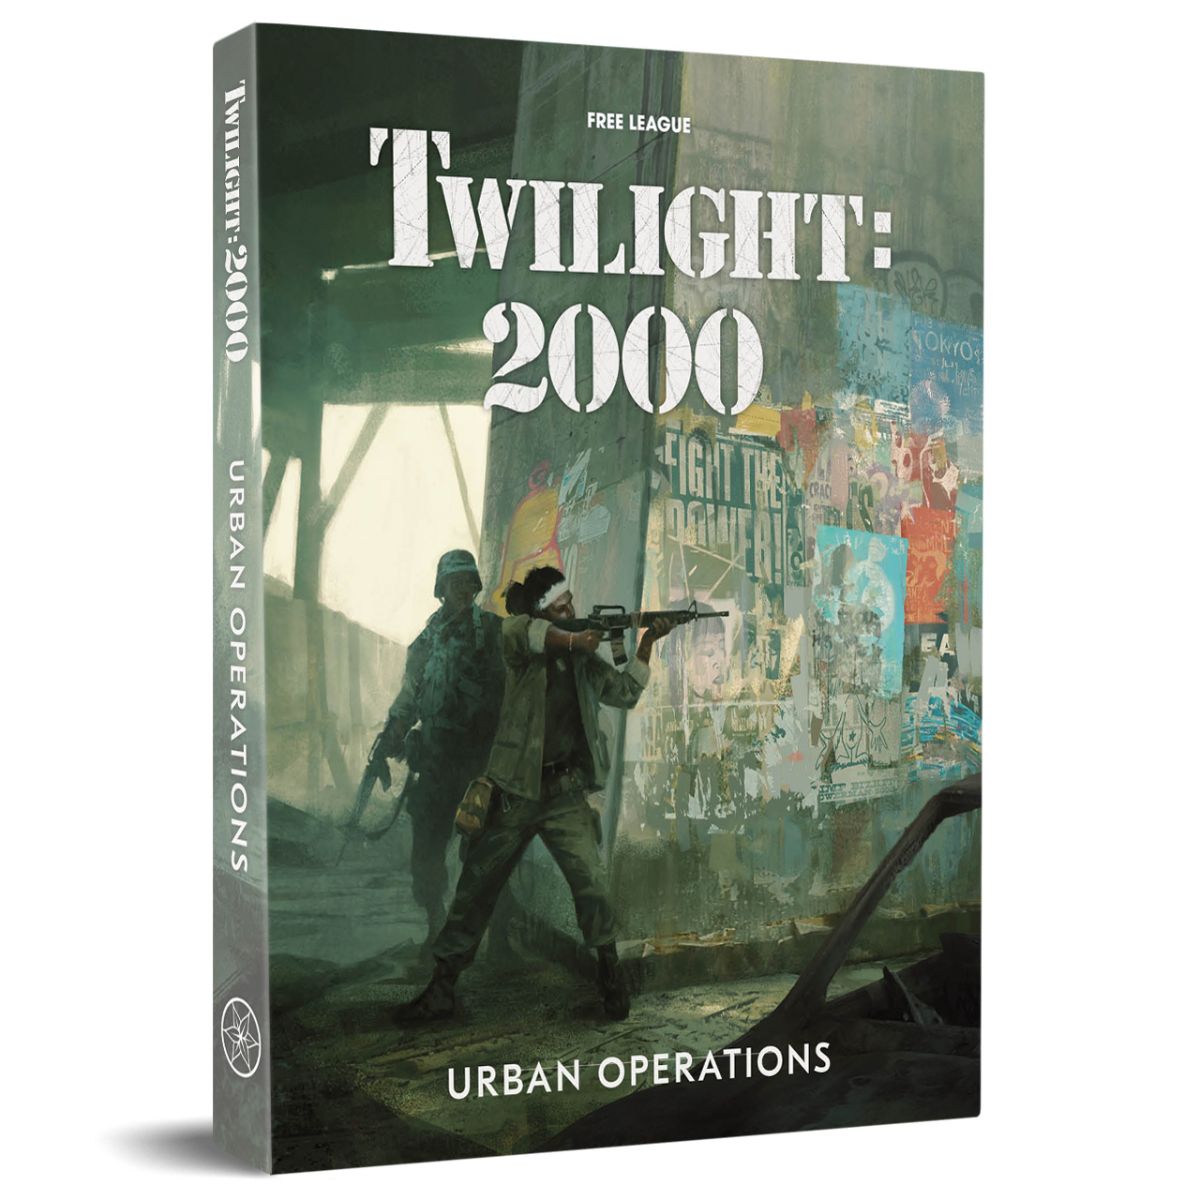 Twilight 2000 Urban Operations - Free League Publishing